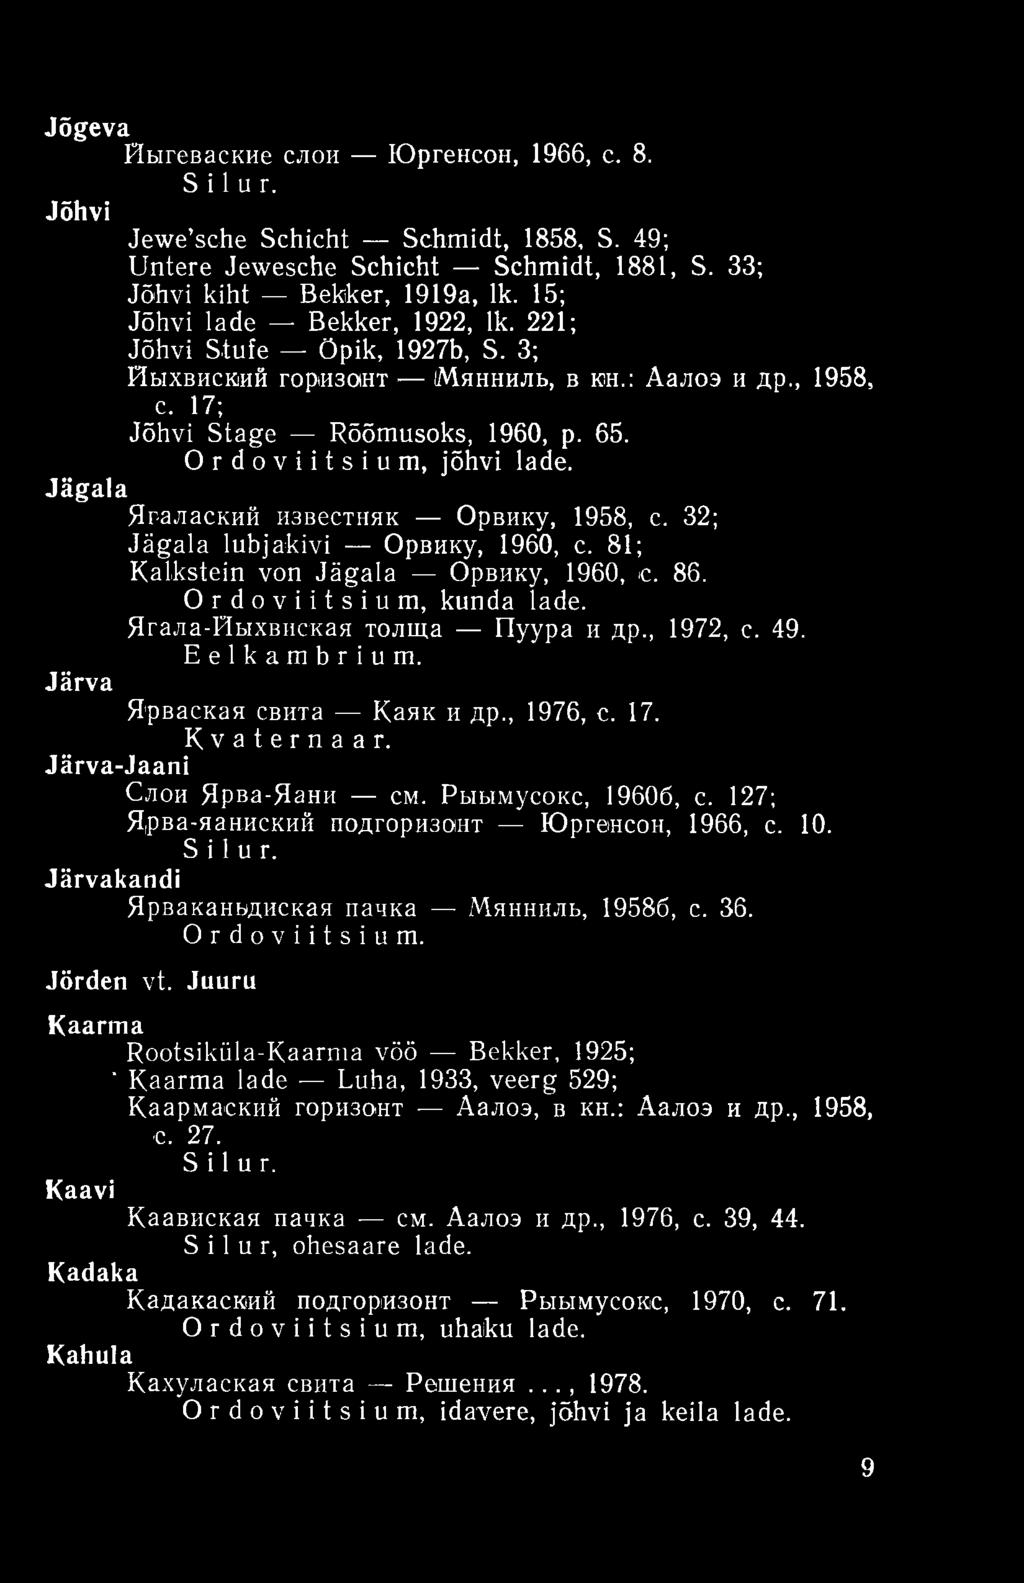 Jägala Яг-алаский известняк Орвику, 1958, с. 32; Jägala lubjakivi Орвику, 1960, с. 81; Kalkstein von Jägala Орвику, 1960, с. 86. Ordoviitsium, kunda lade. Ягала-Иыхвиская толща Пуура и др., 1972, с.